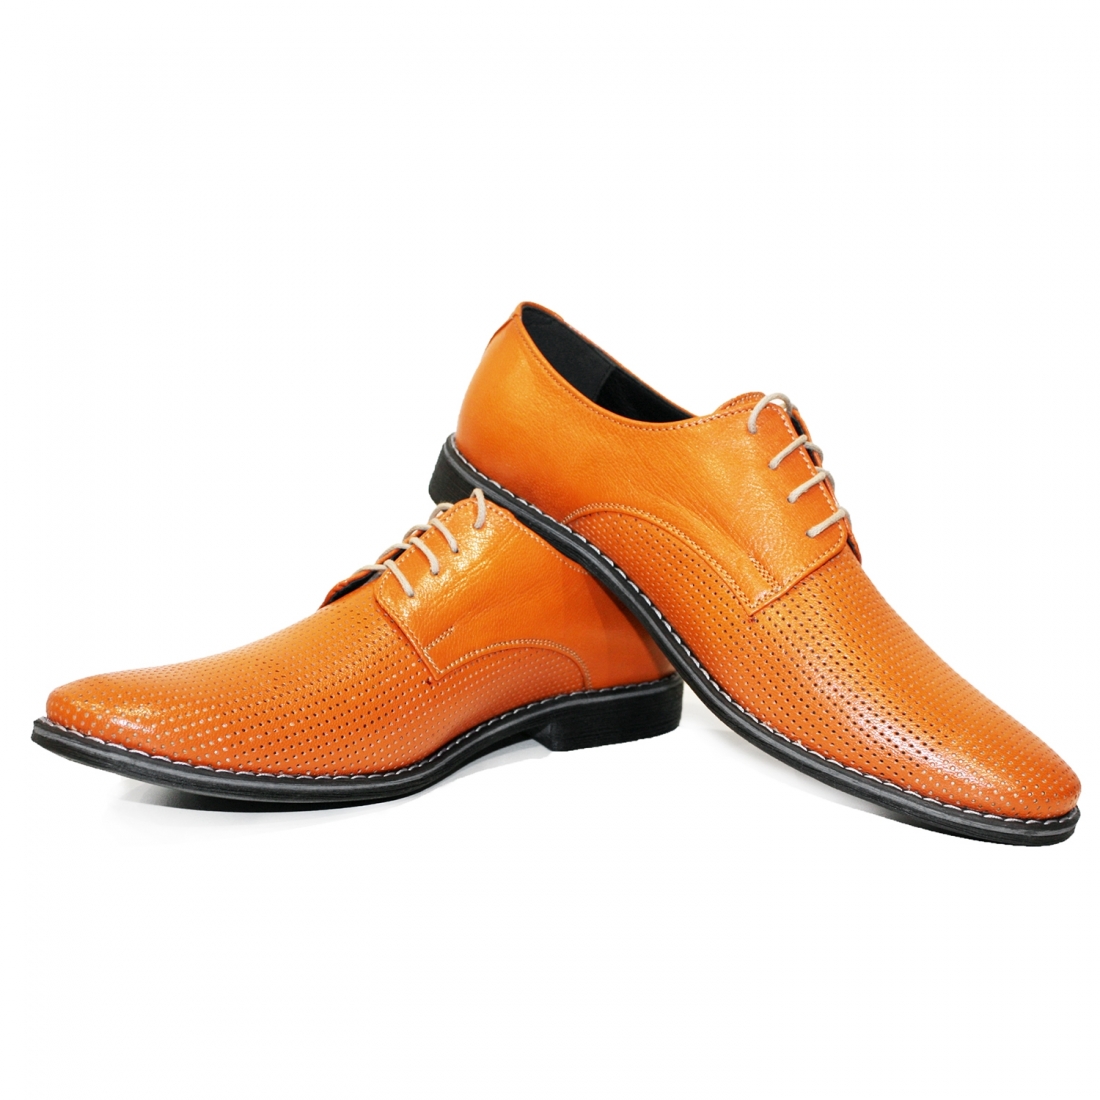 Modello Pomarone - Zapatos Clásicos - Handmade Colorful Italian Leather Shoes